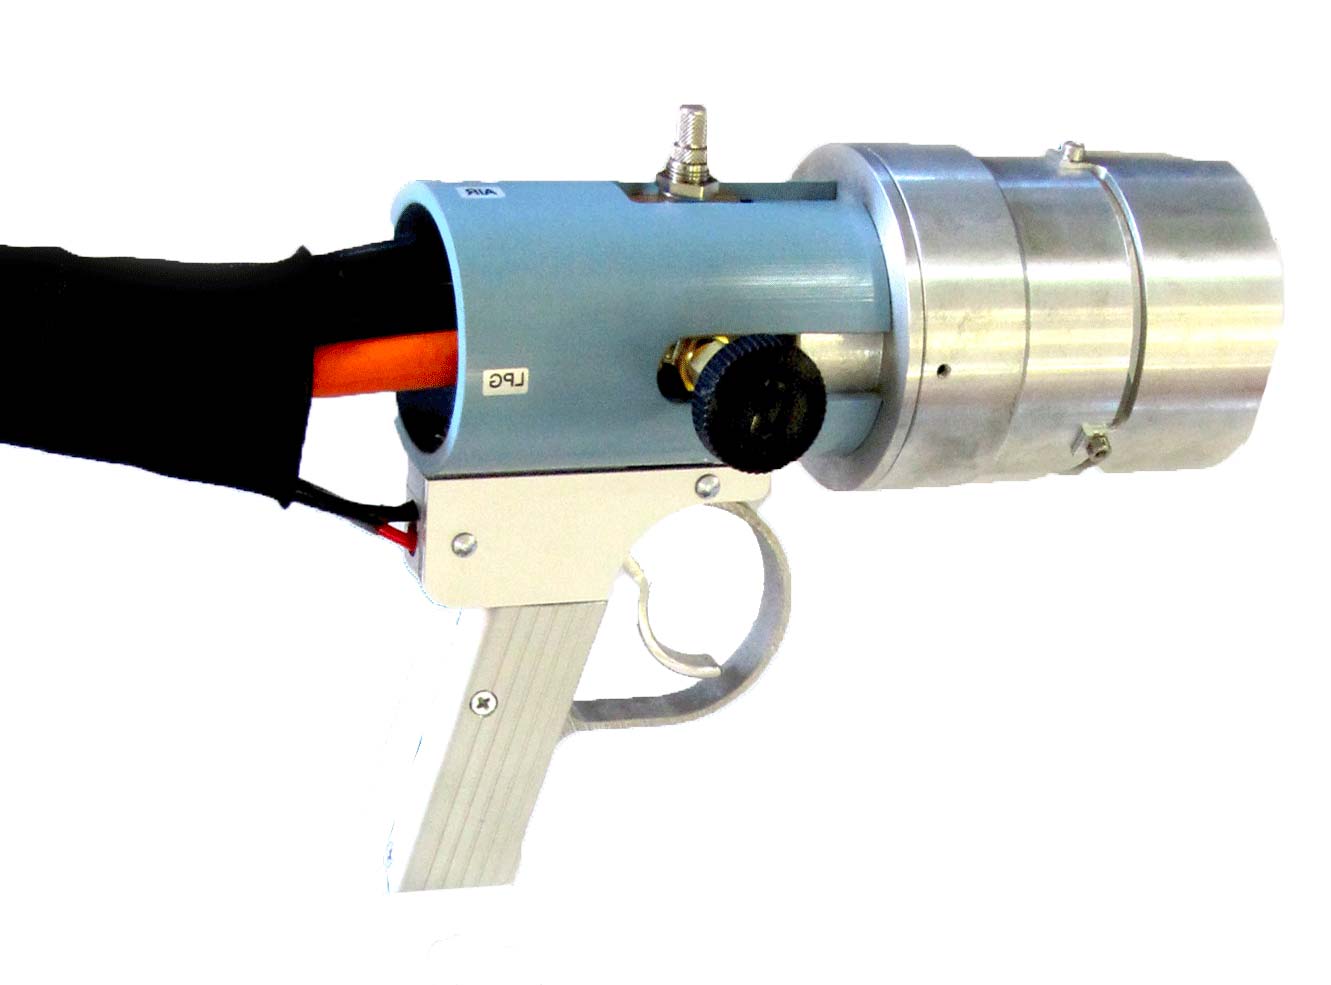 Large gun: suitable for larger diameter pipe joints, bends, buckle arrestors.